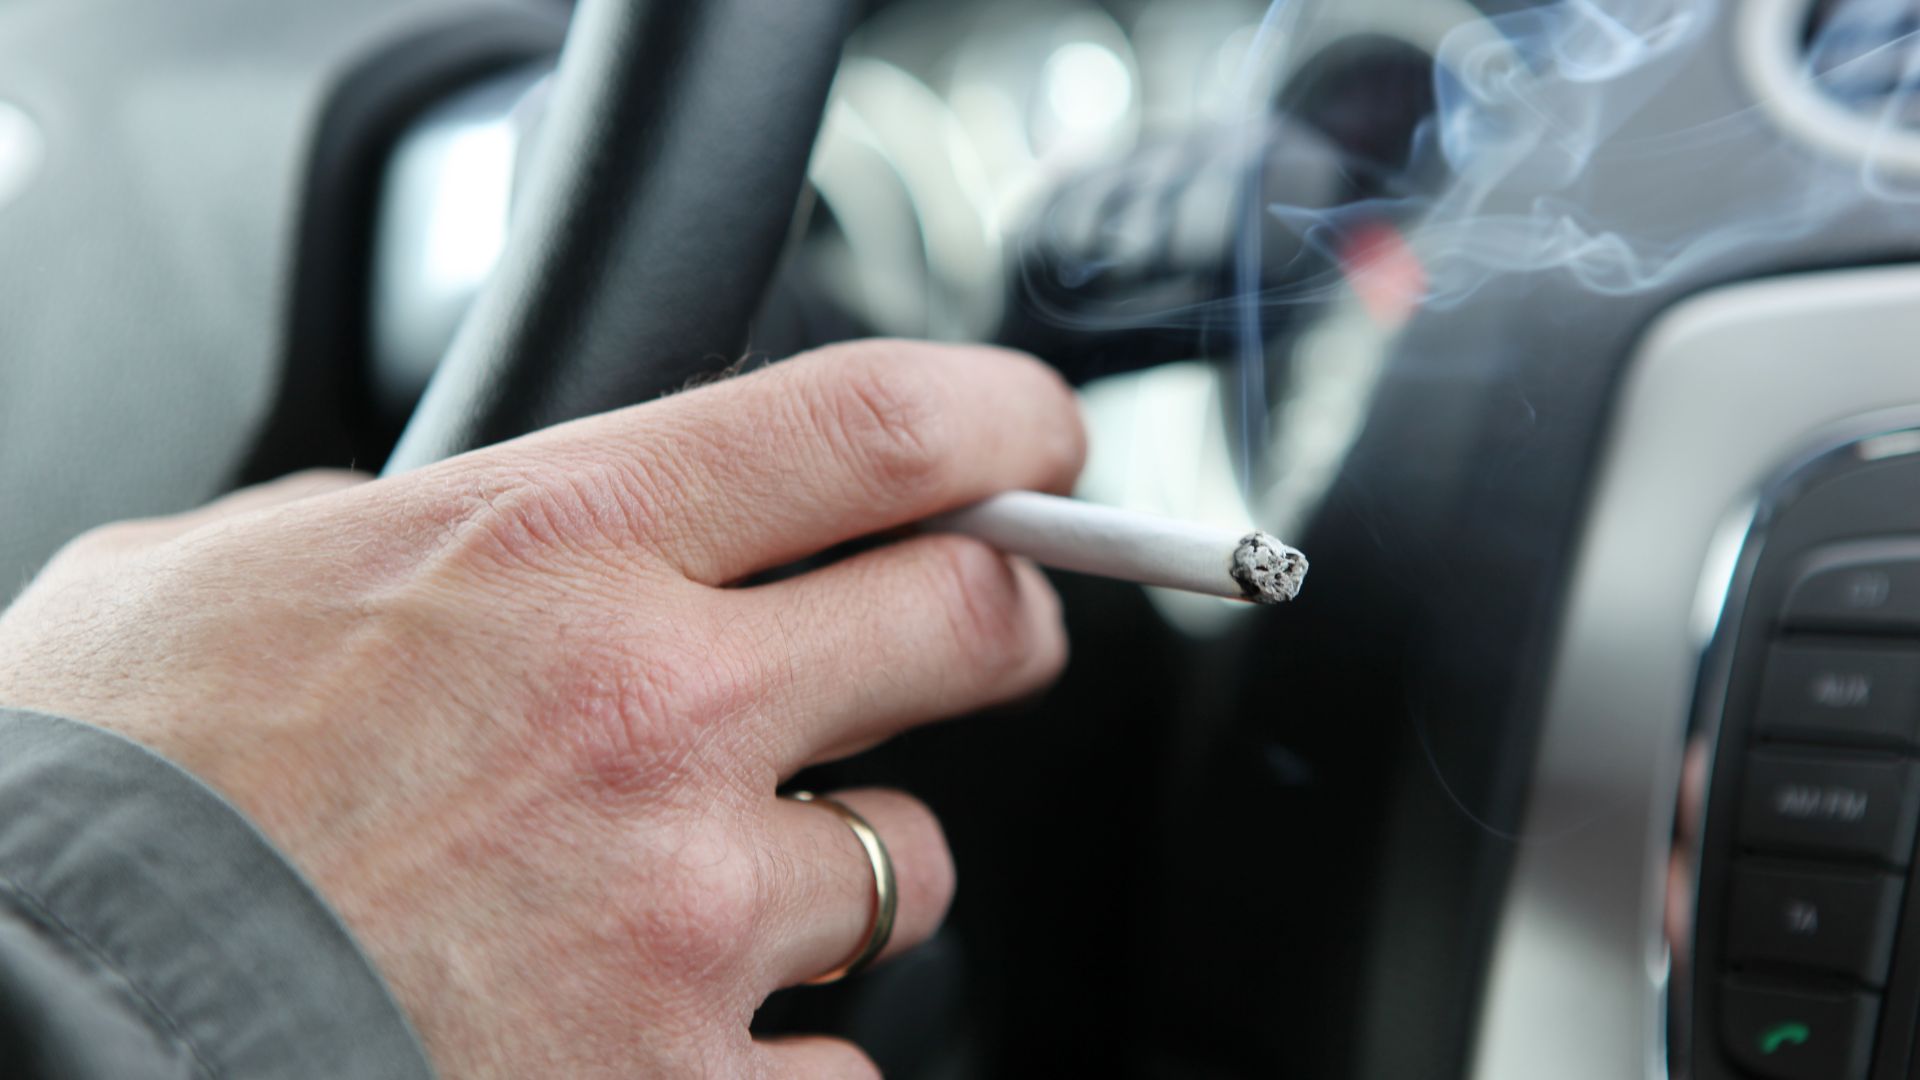 a person smoking a cigarette in a car.